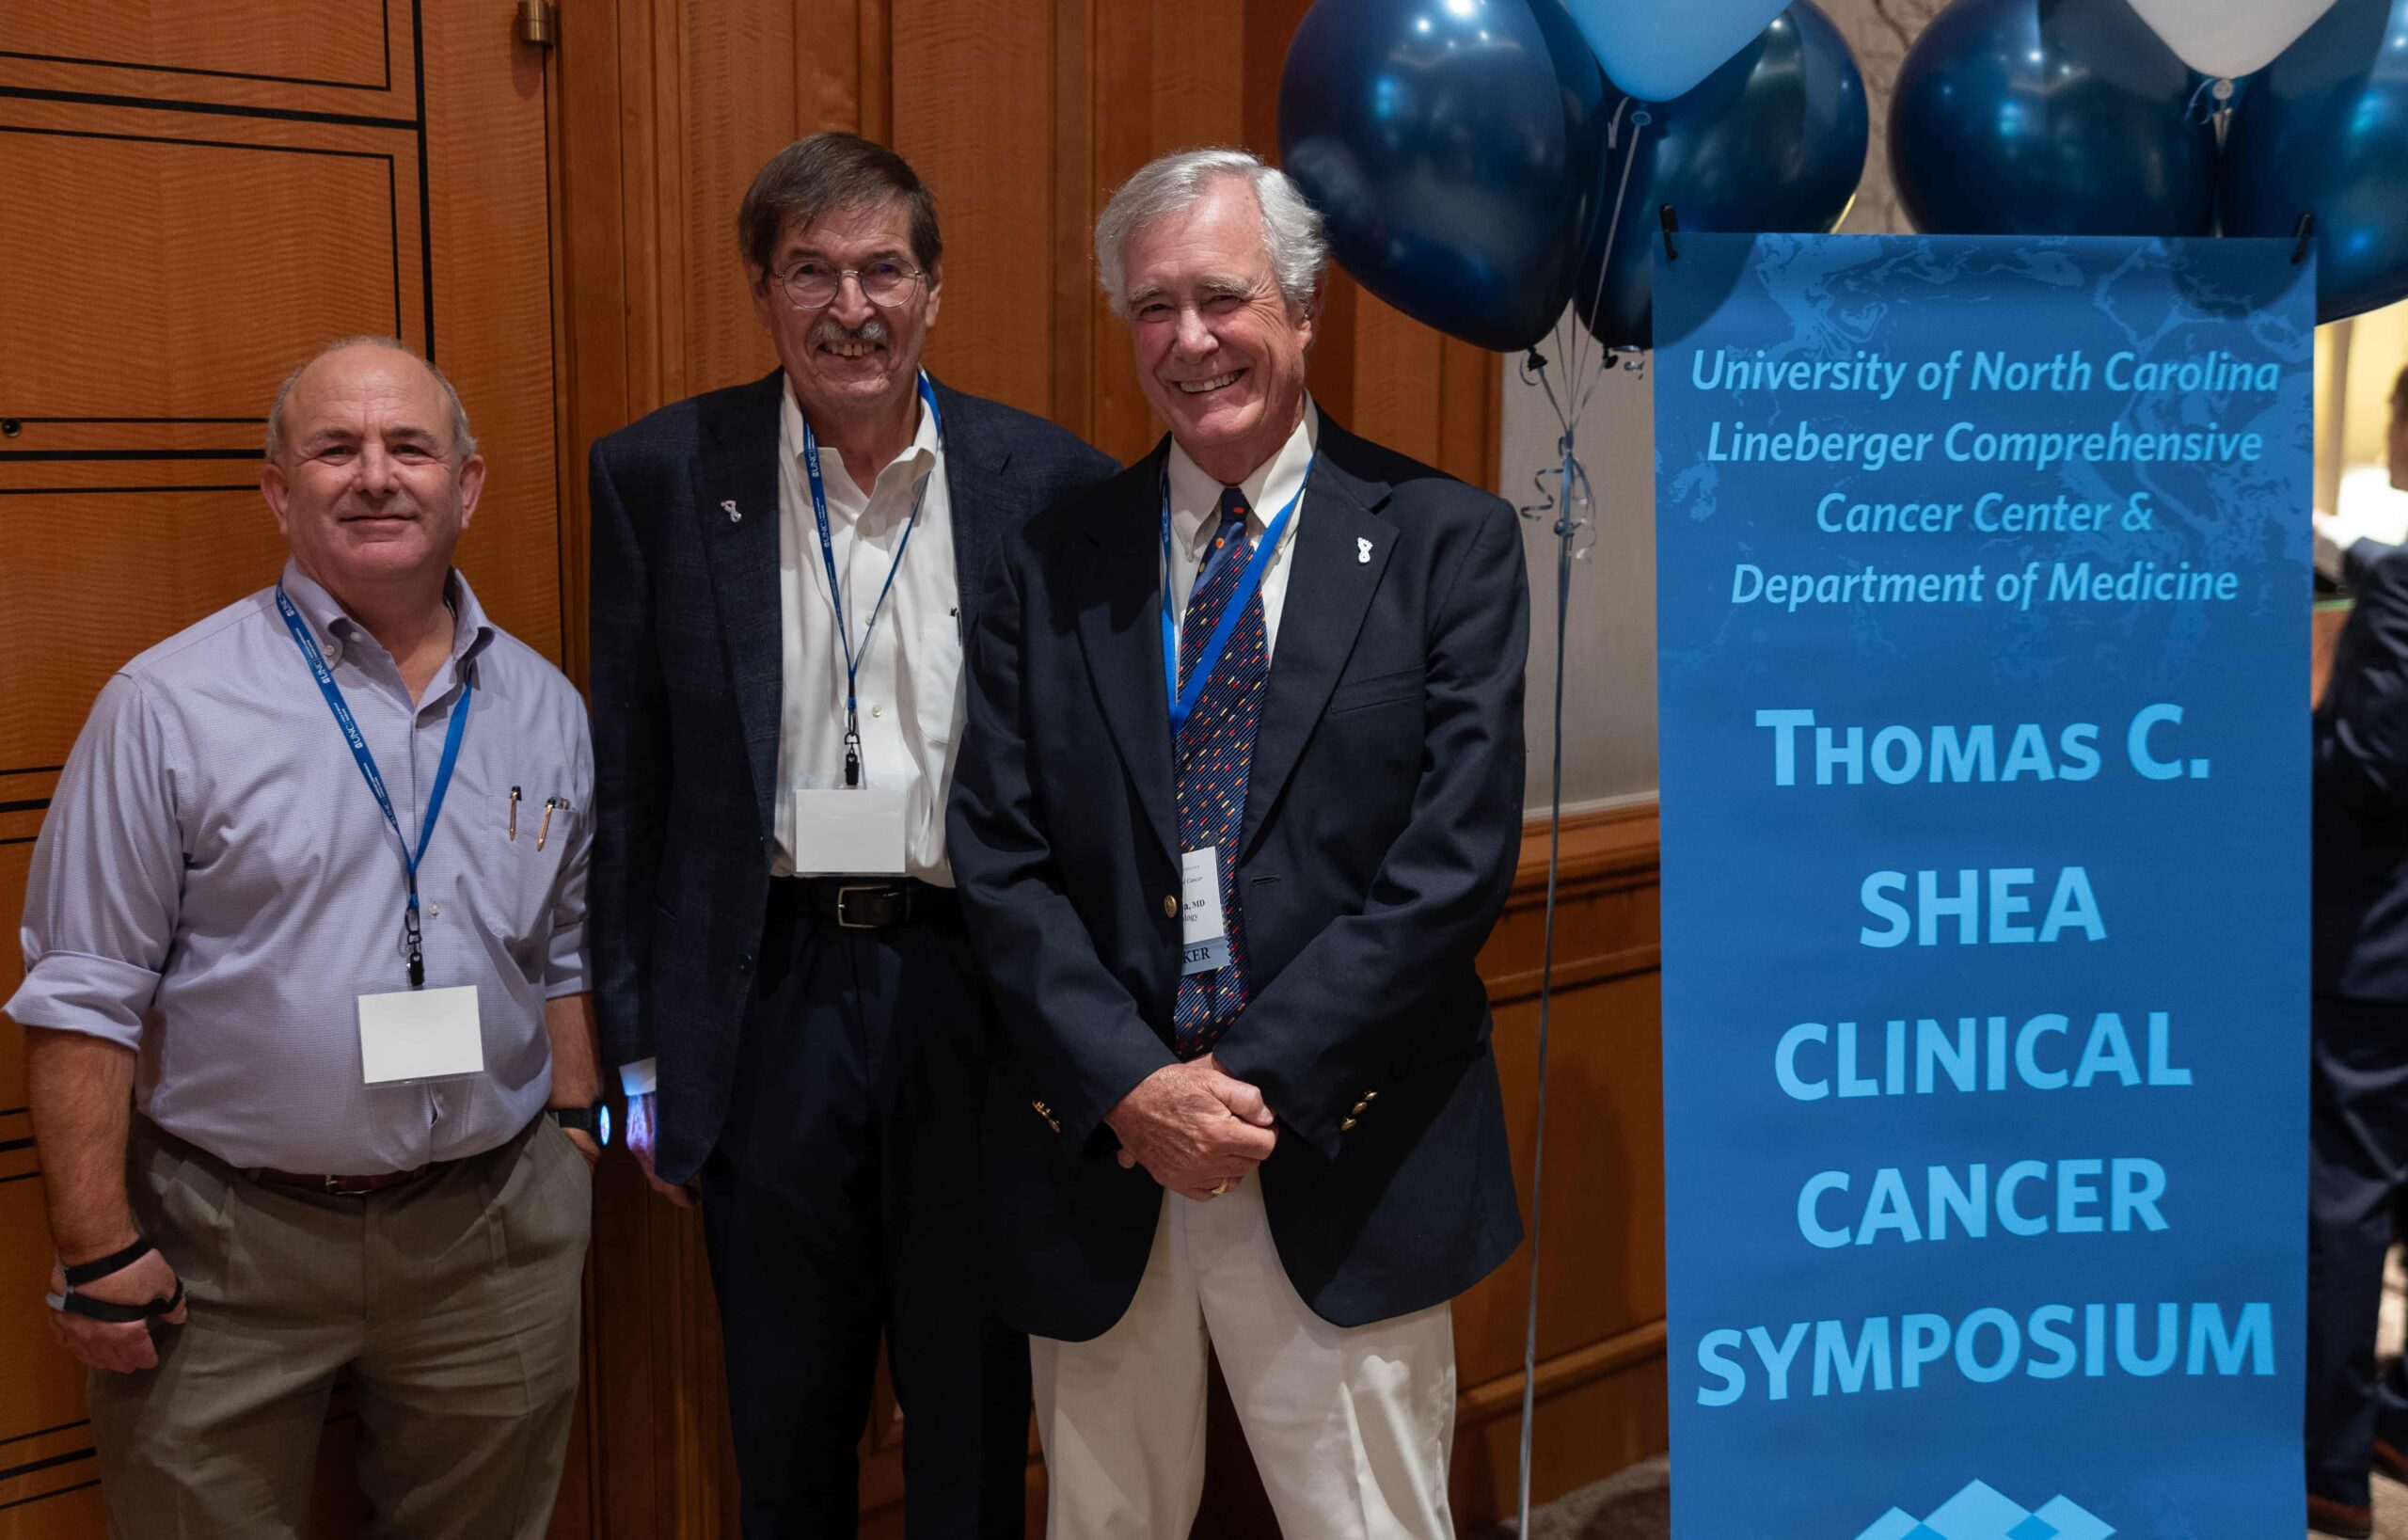 Jon Serody, Shelley Earp, and Tom Shea at the inaugural Shea Symposium